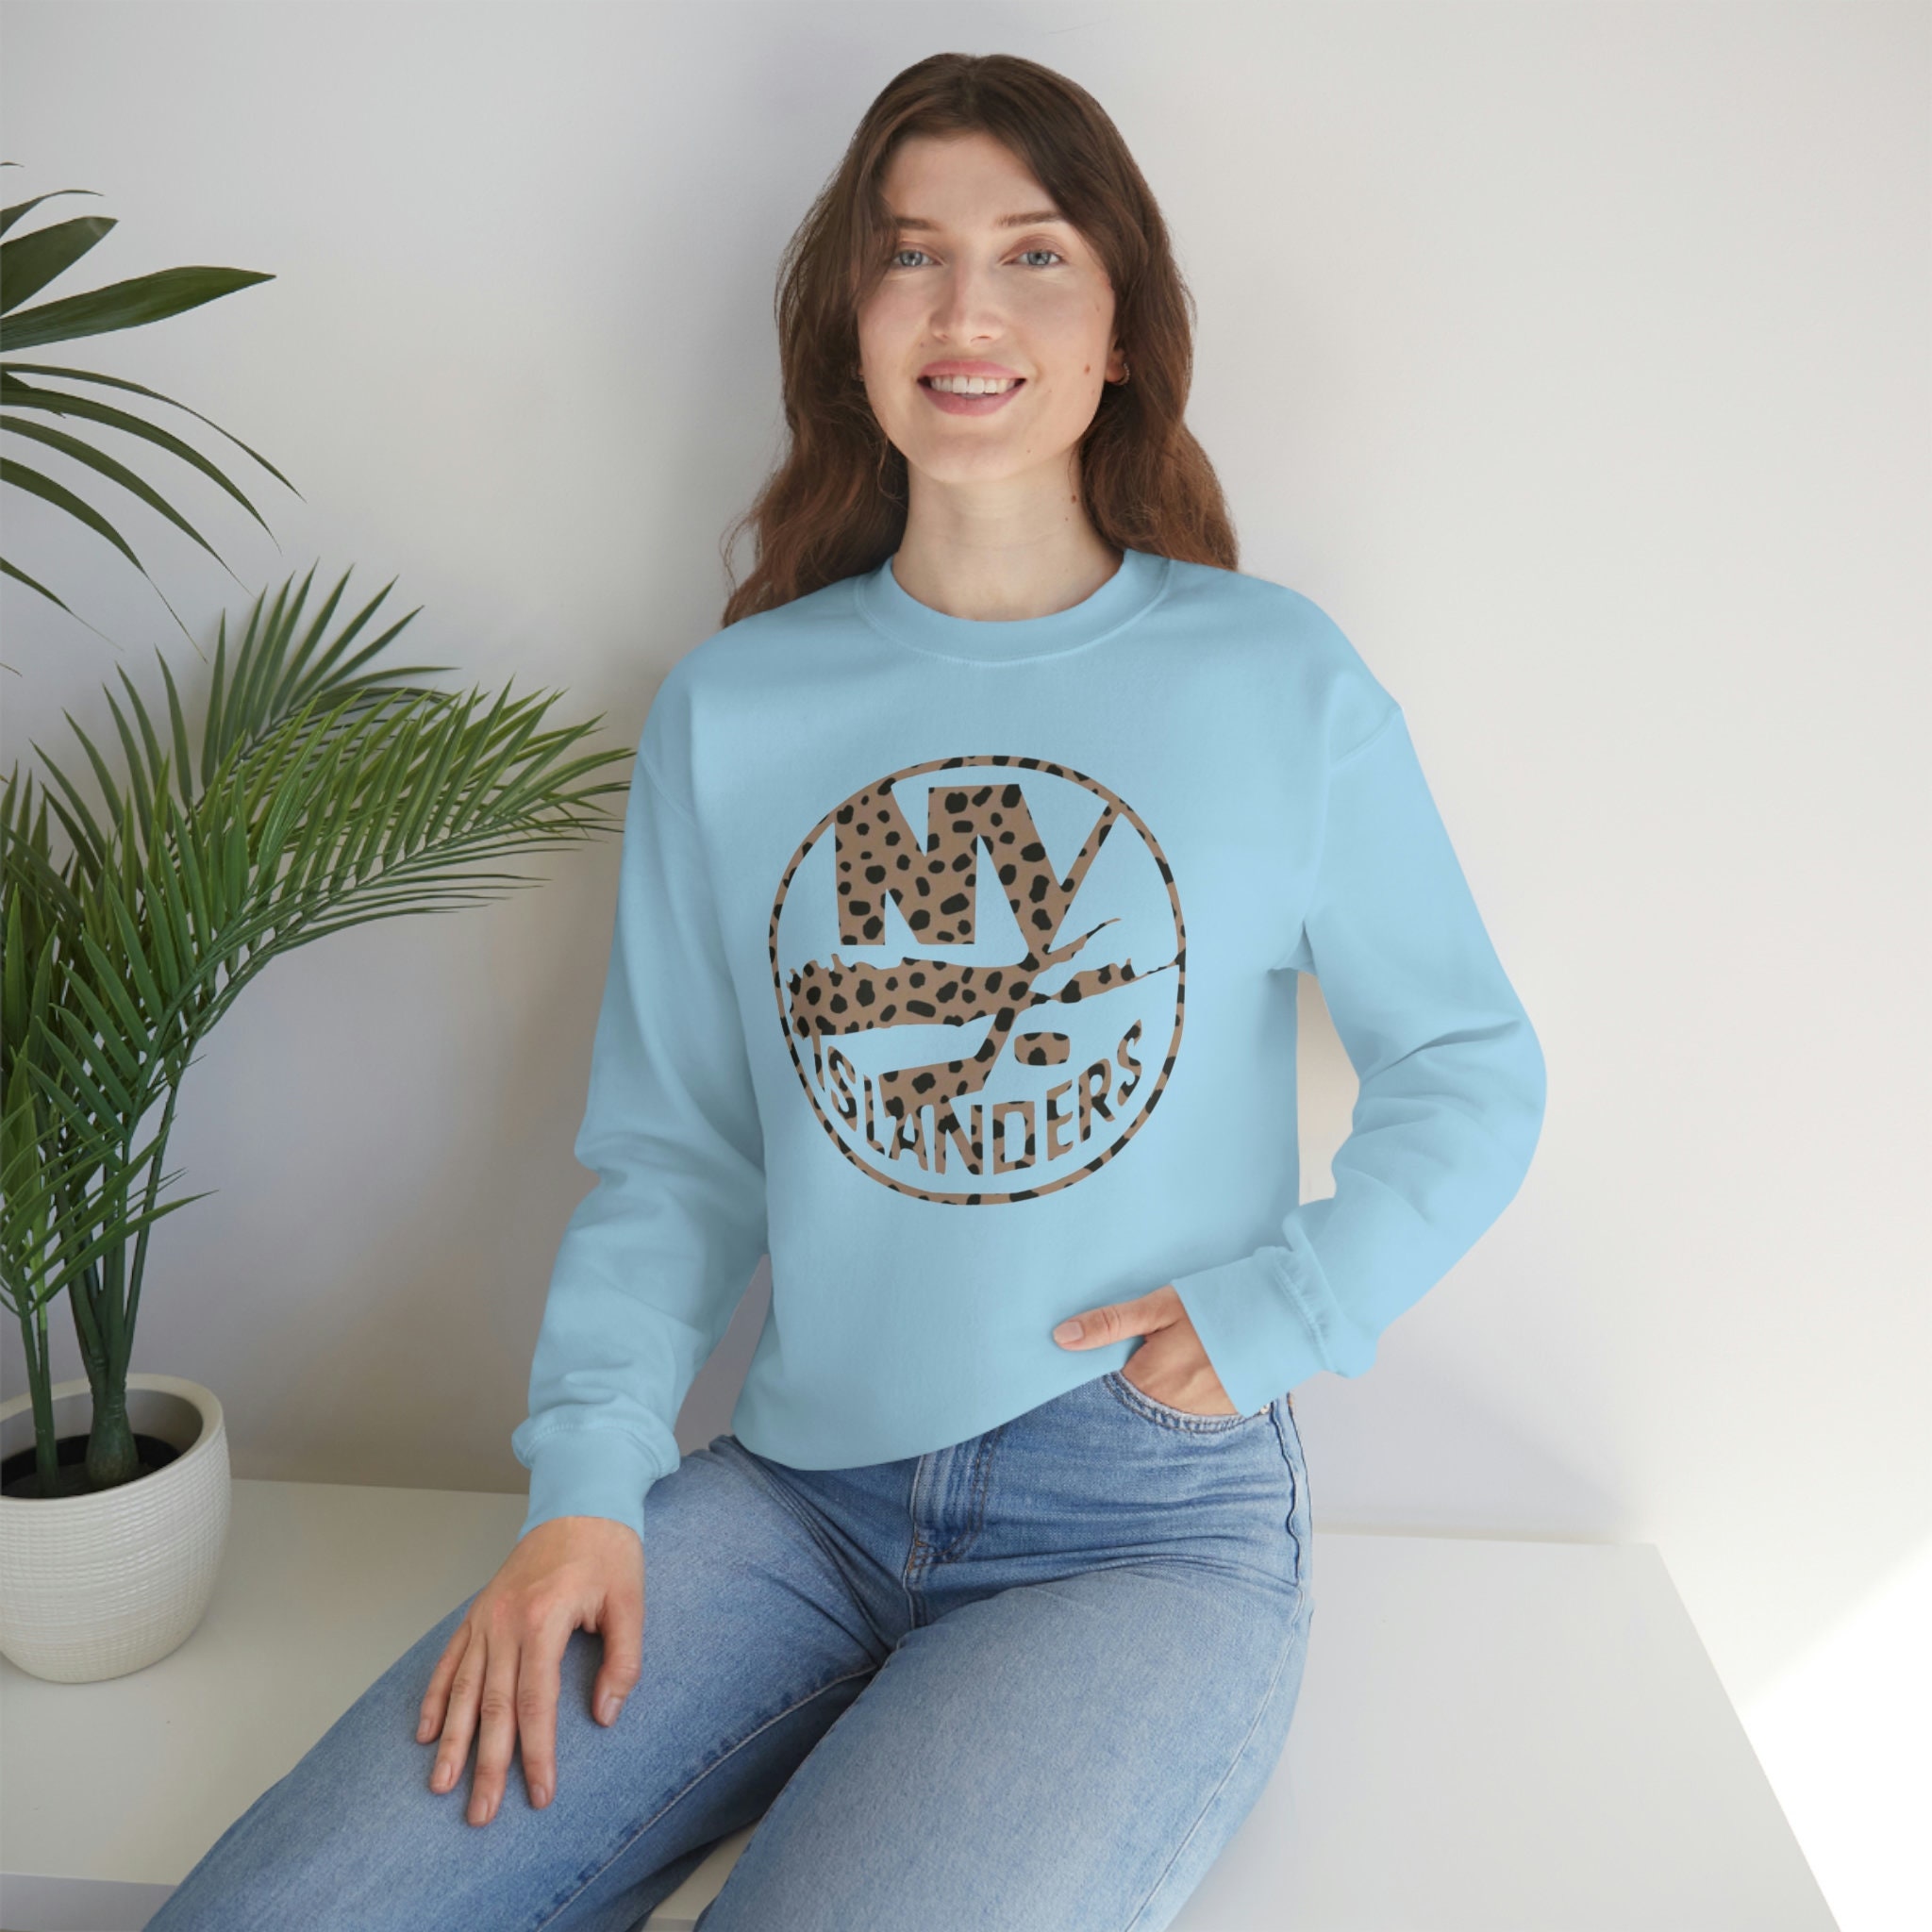 Orange Cheetah Print New York Islanders Sweatshirt S / Dark Heather